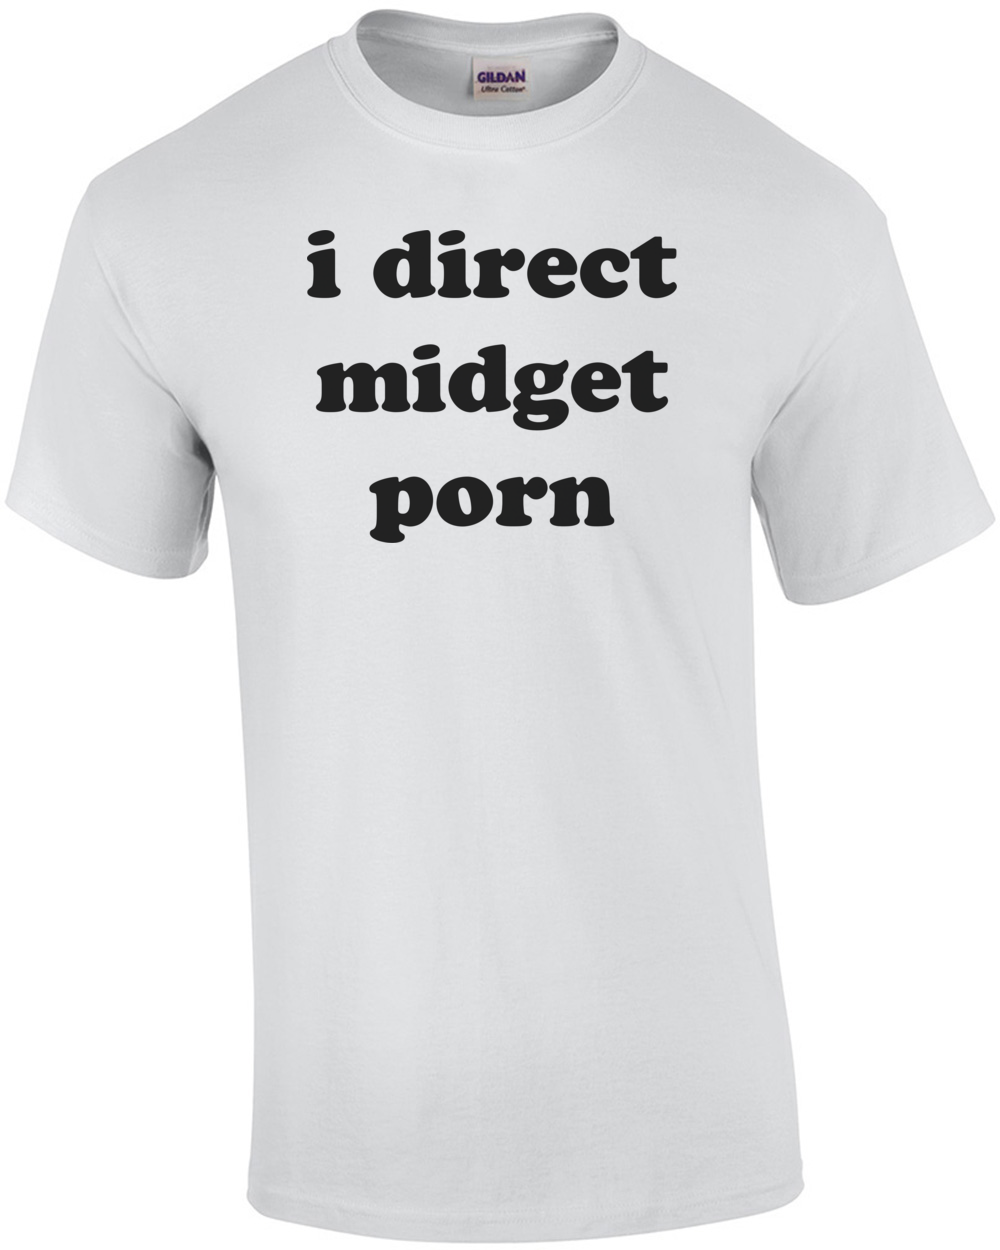 I direct midget porn t